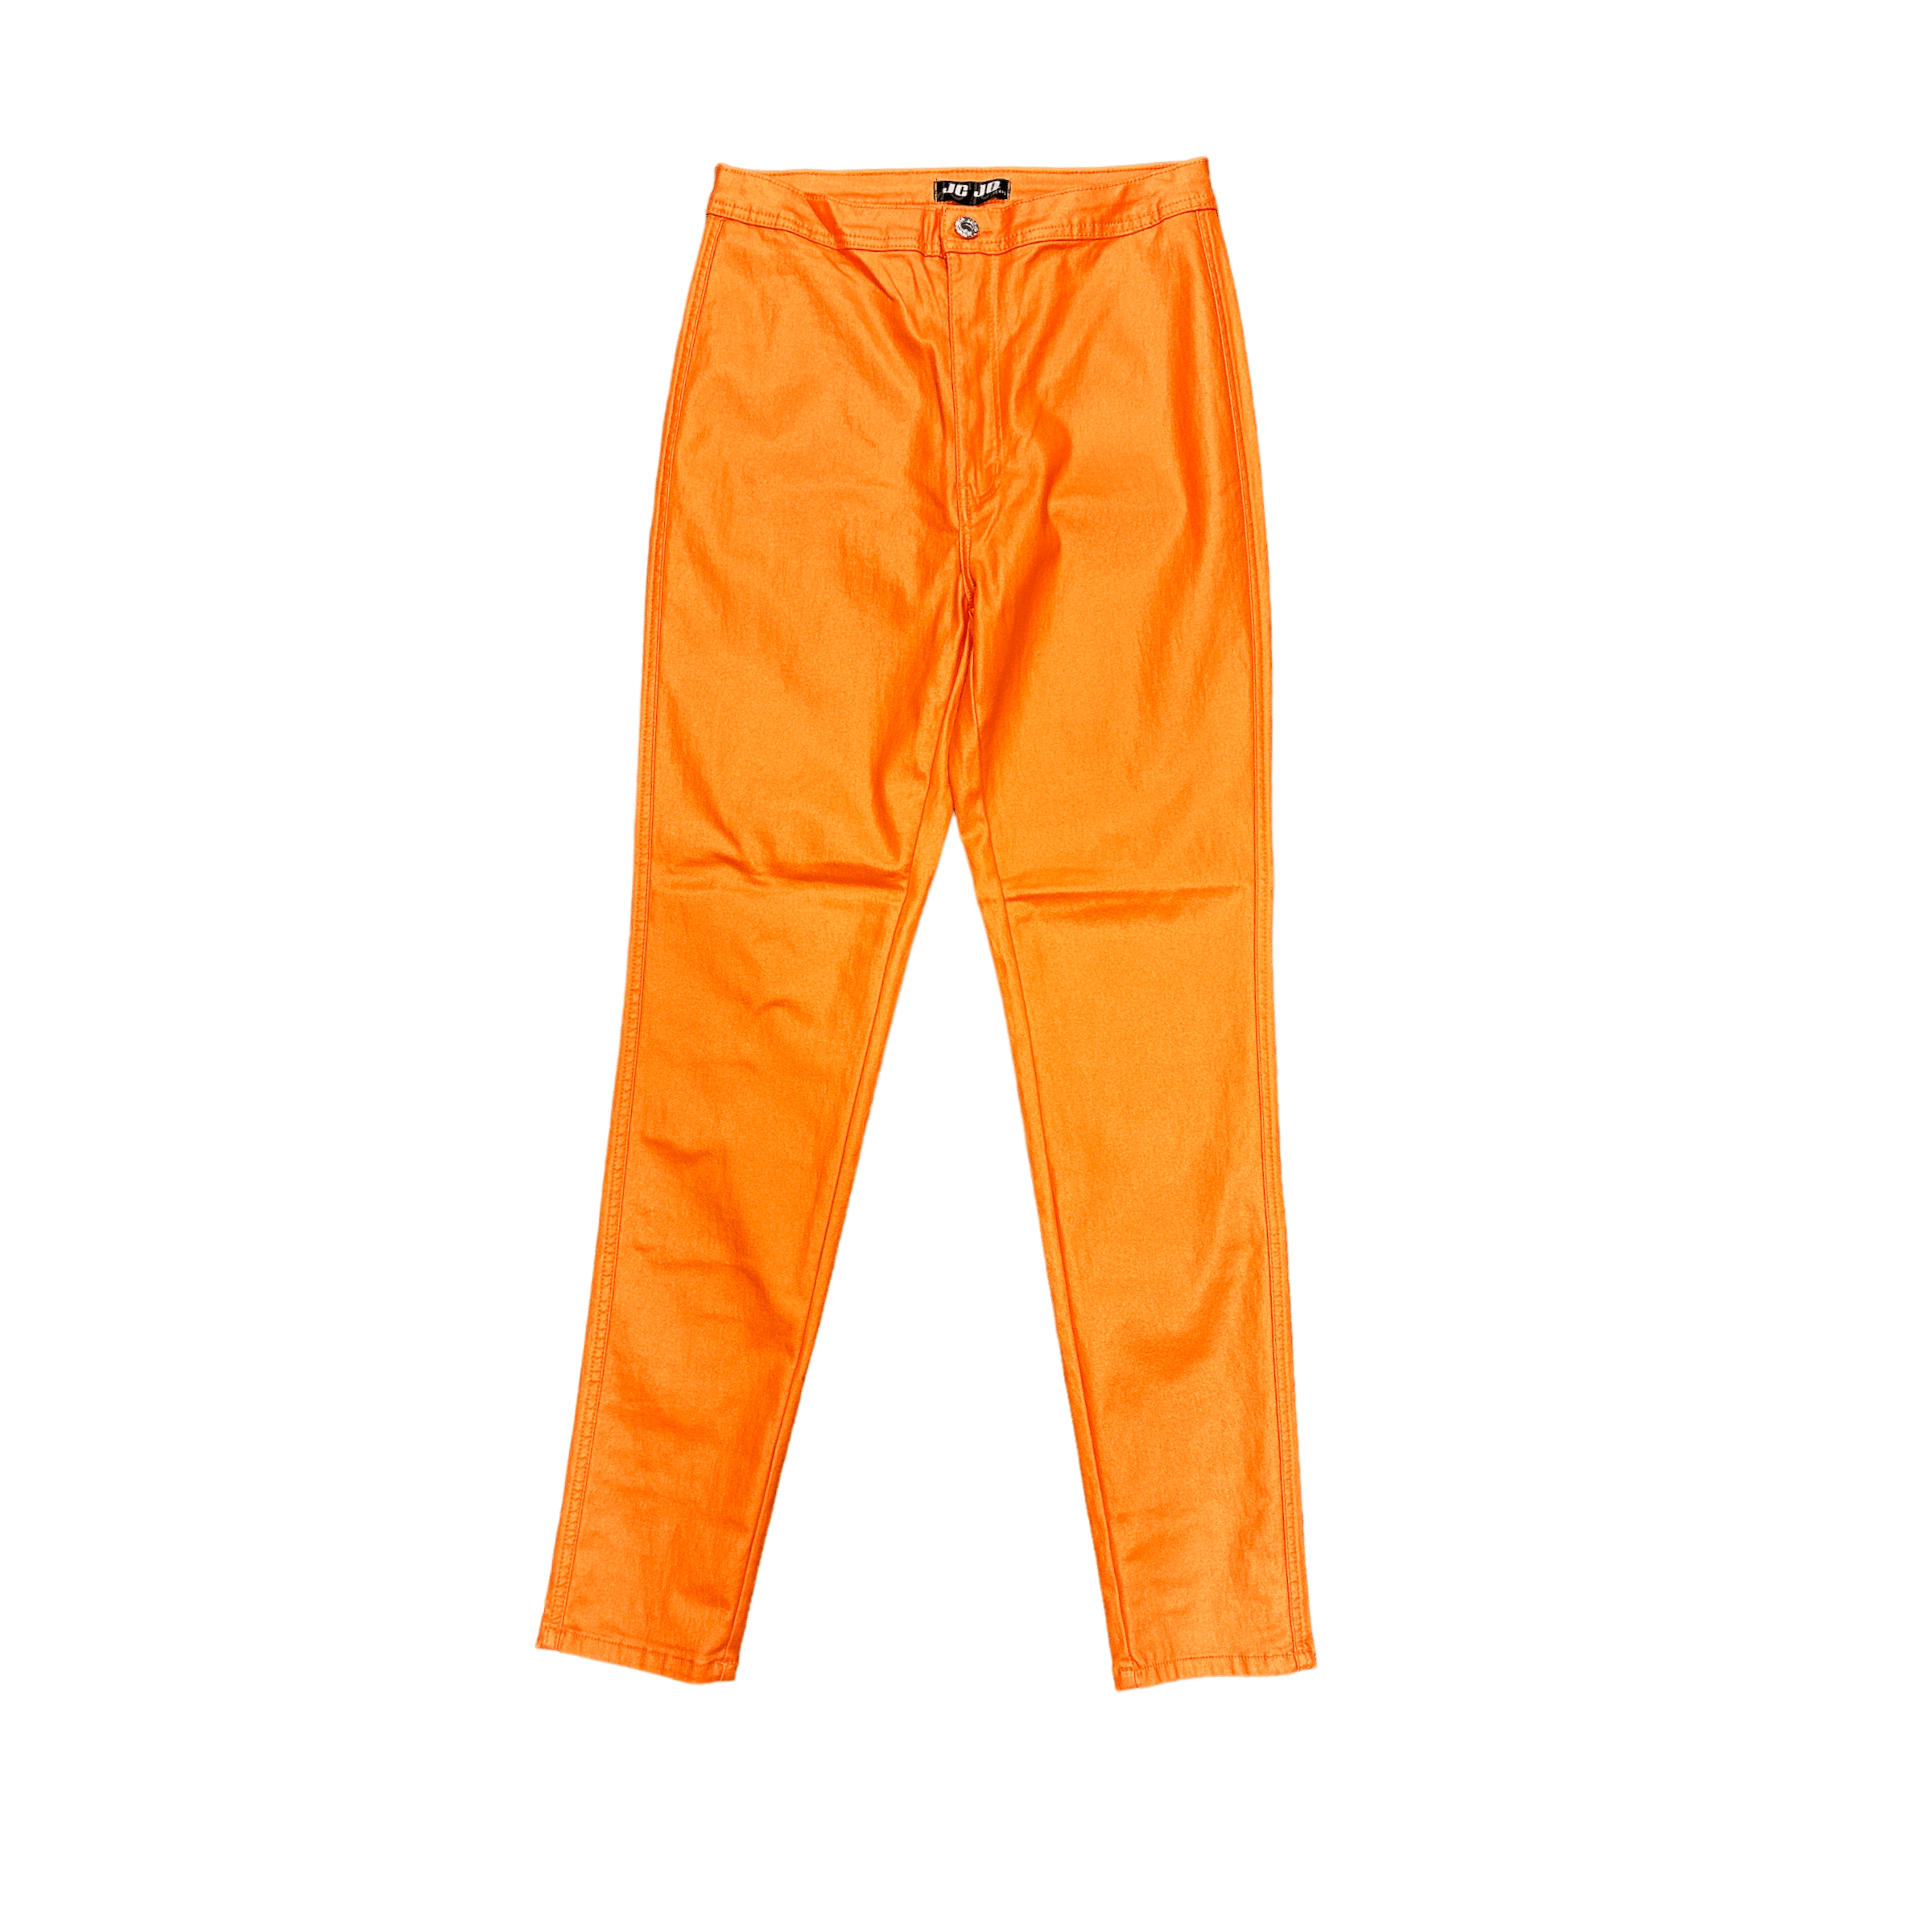 Mastermind315 Orange metallic highways pants